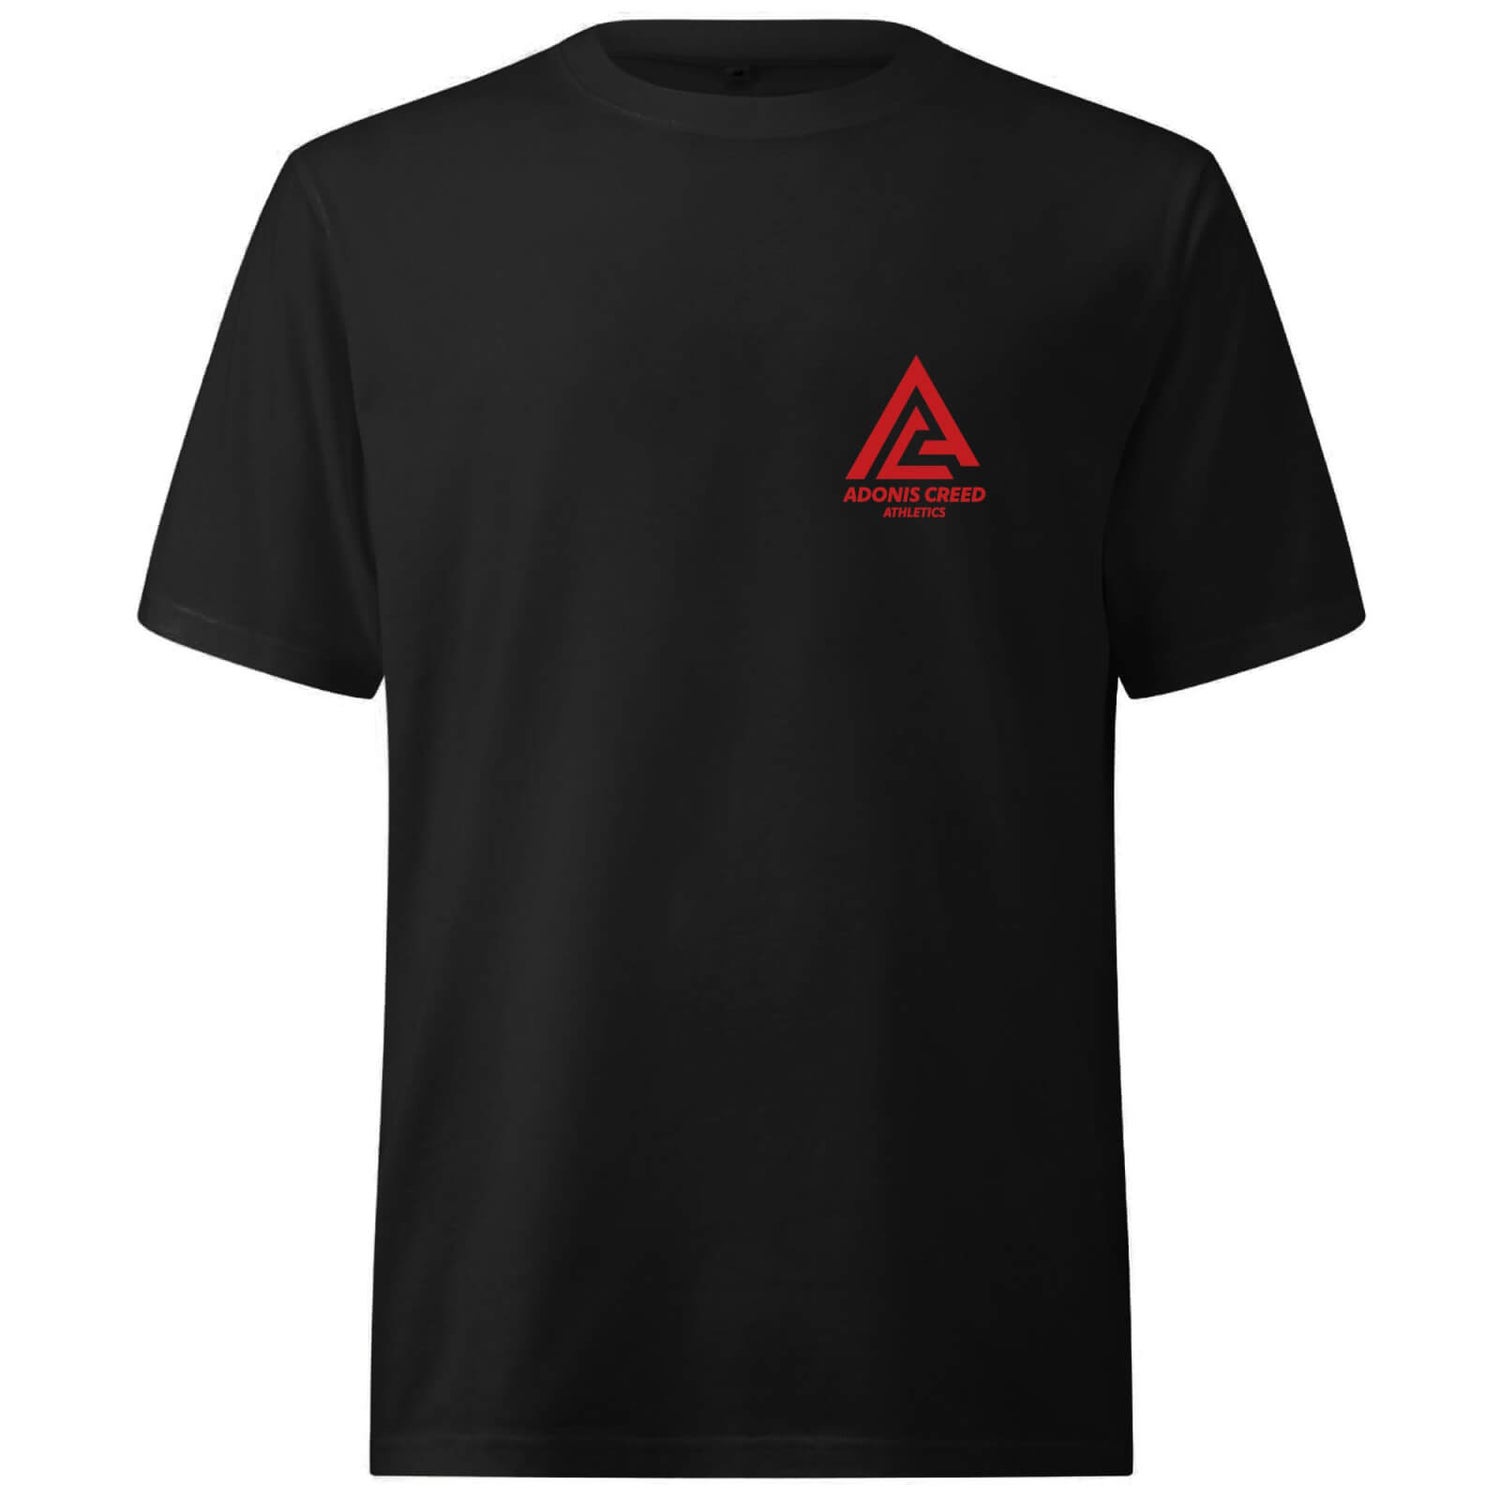 Creed Adonis Creed Athletics Logo Oversized Heavyweight T-Shirt - Black - XS